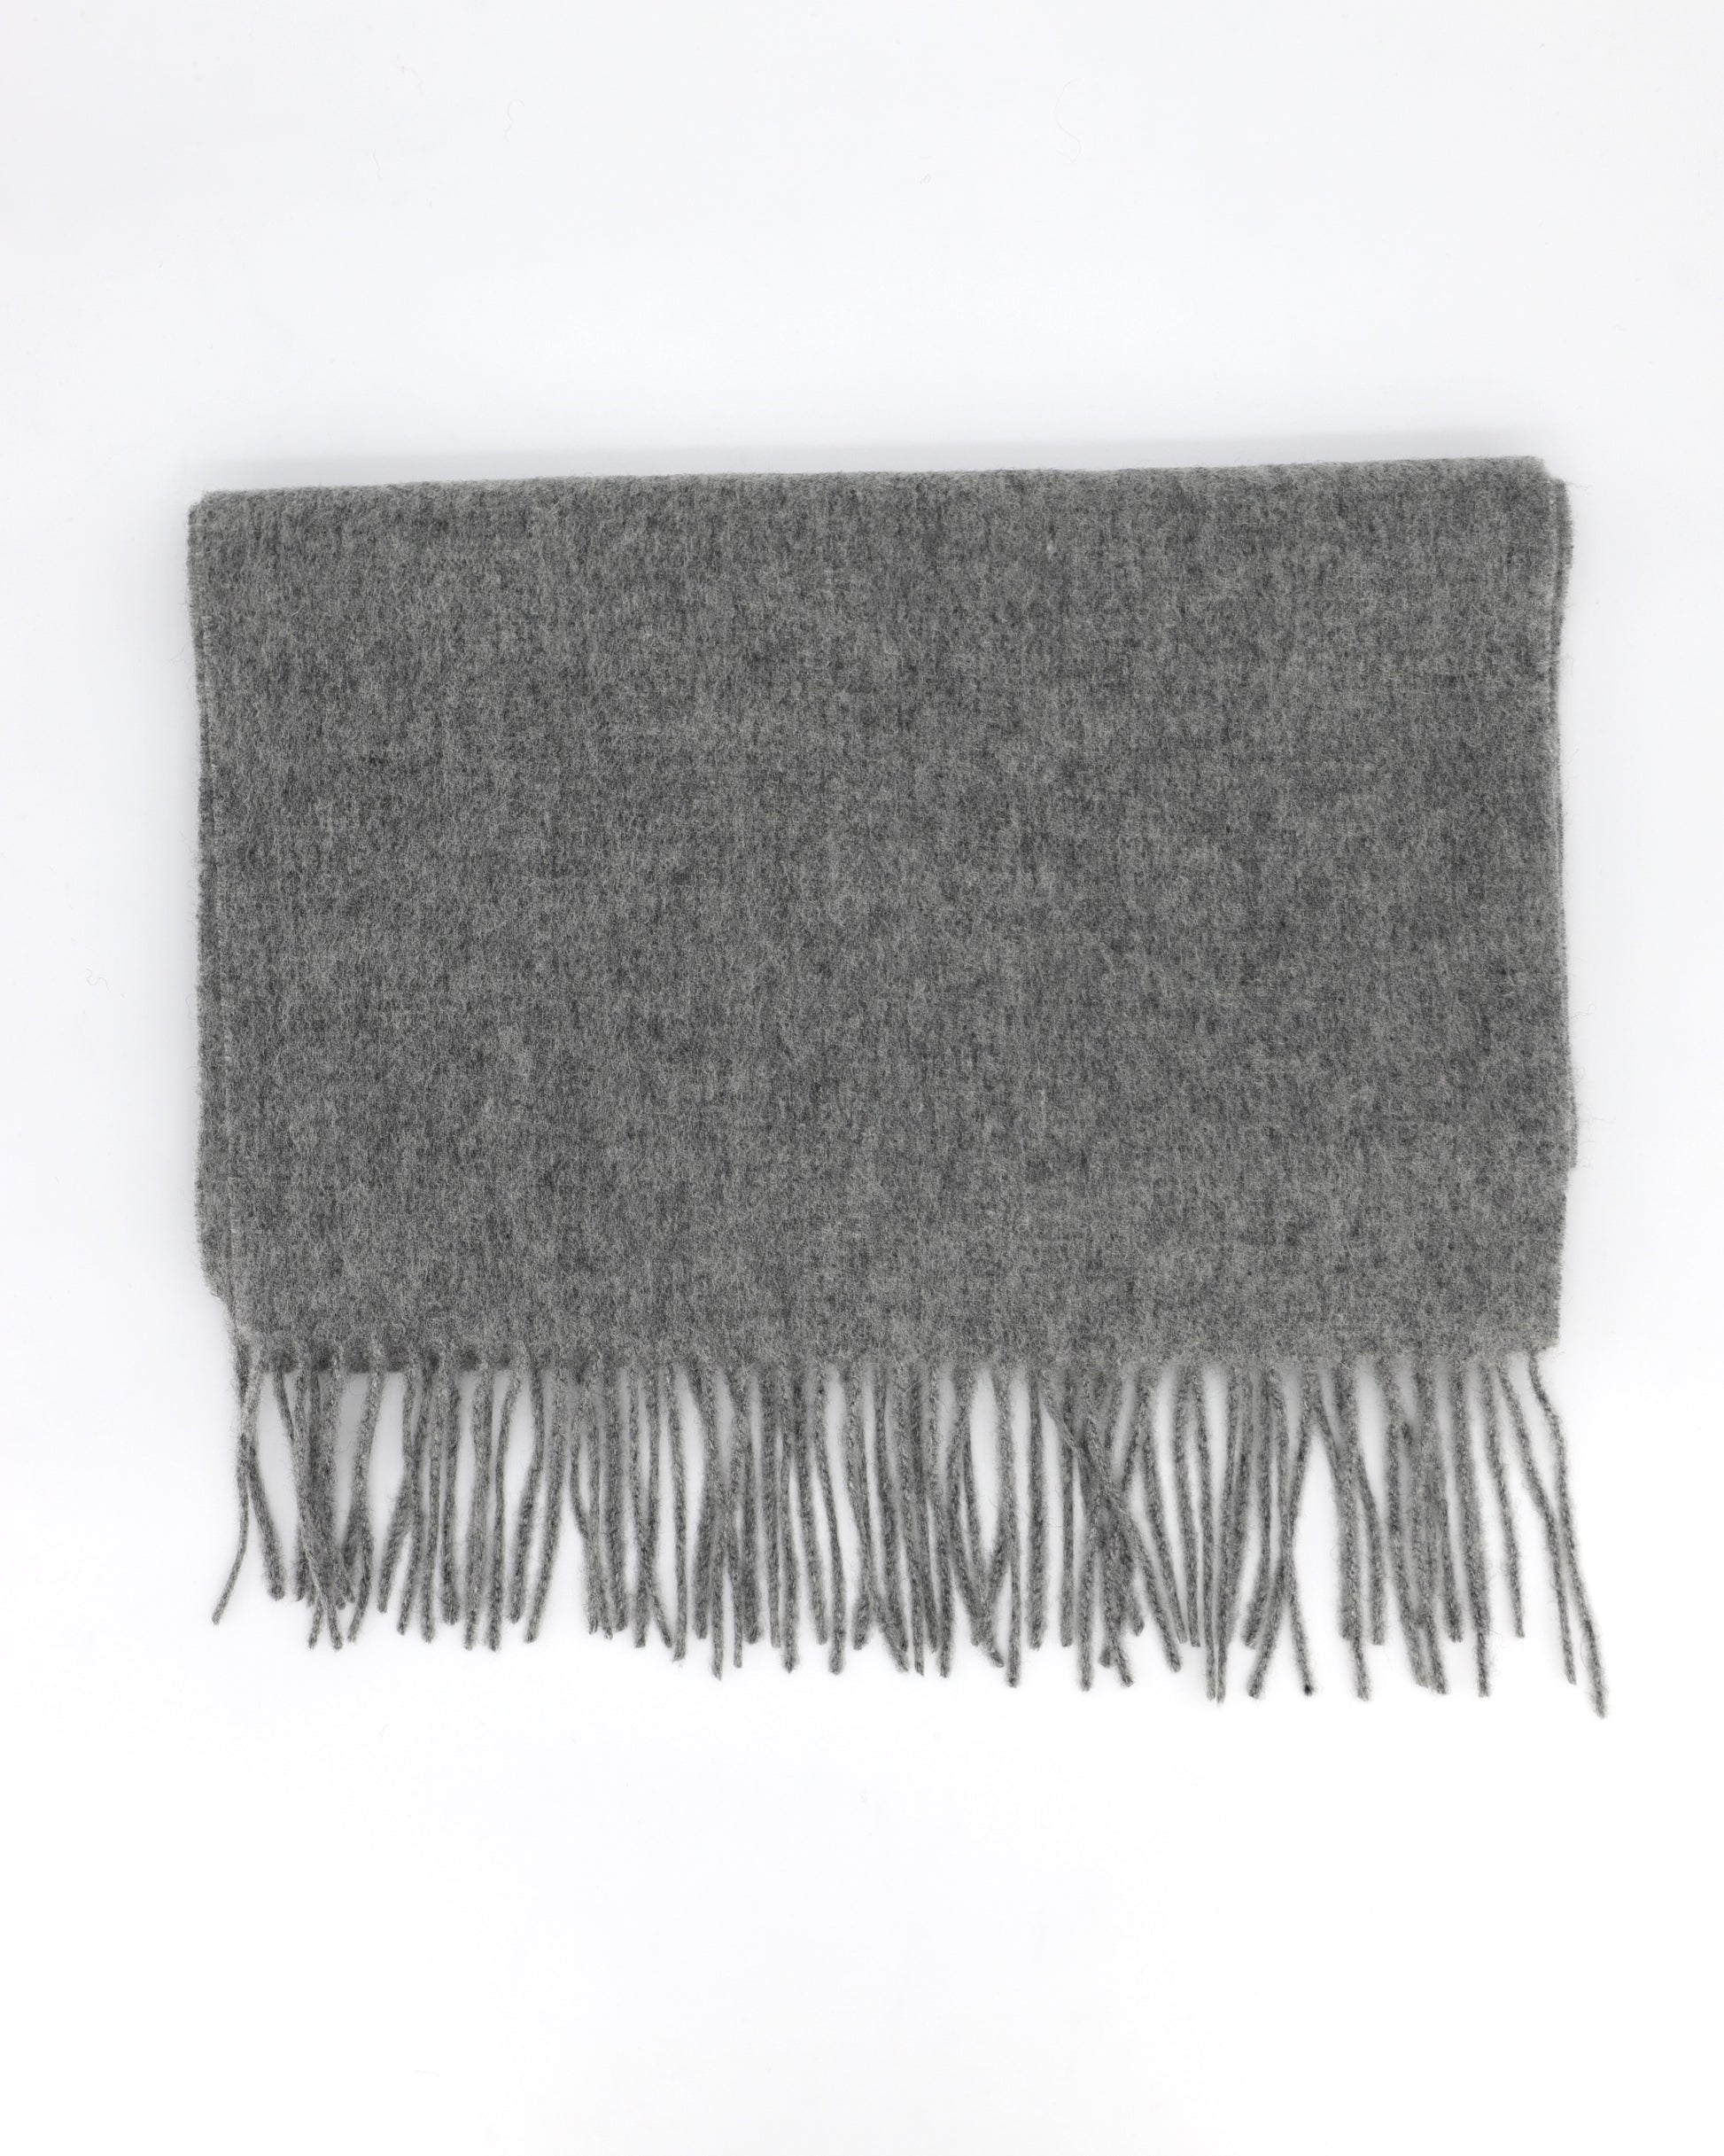 Merino Wool Scarf - Medium Gray - Scarf Designers